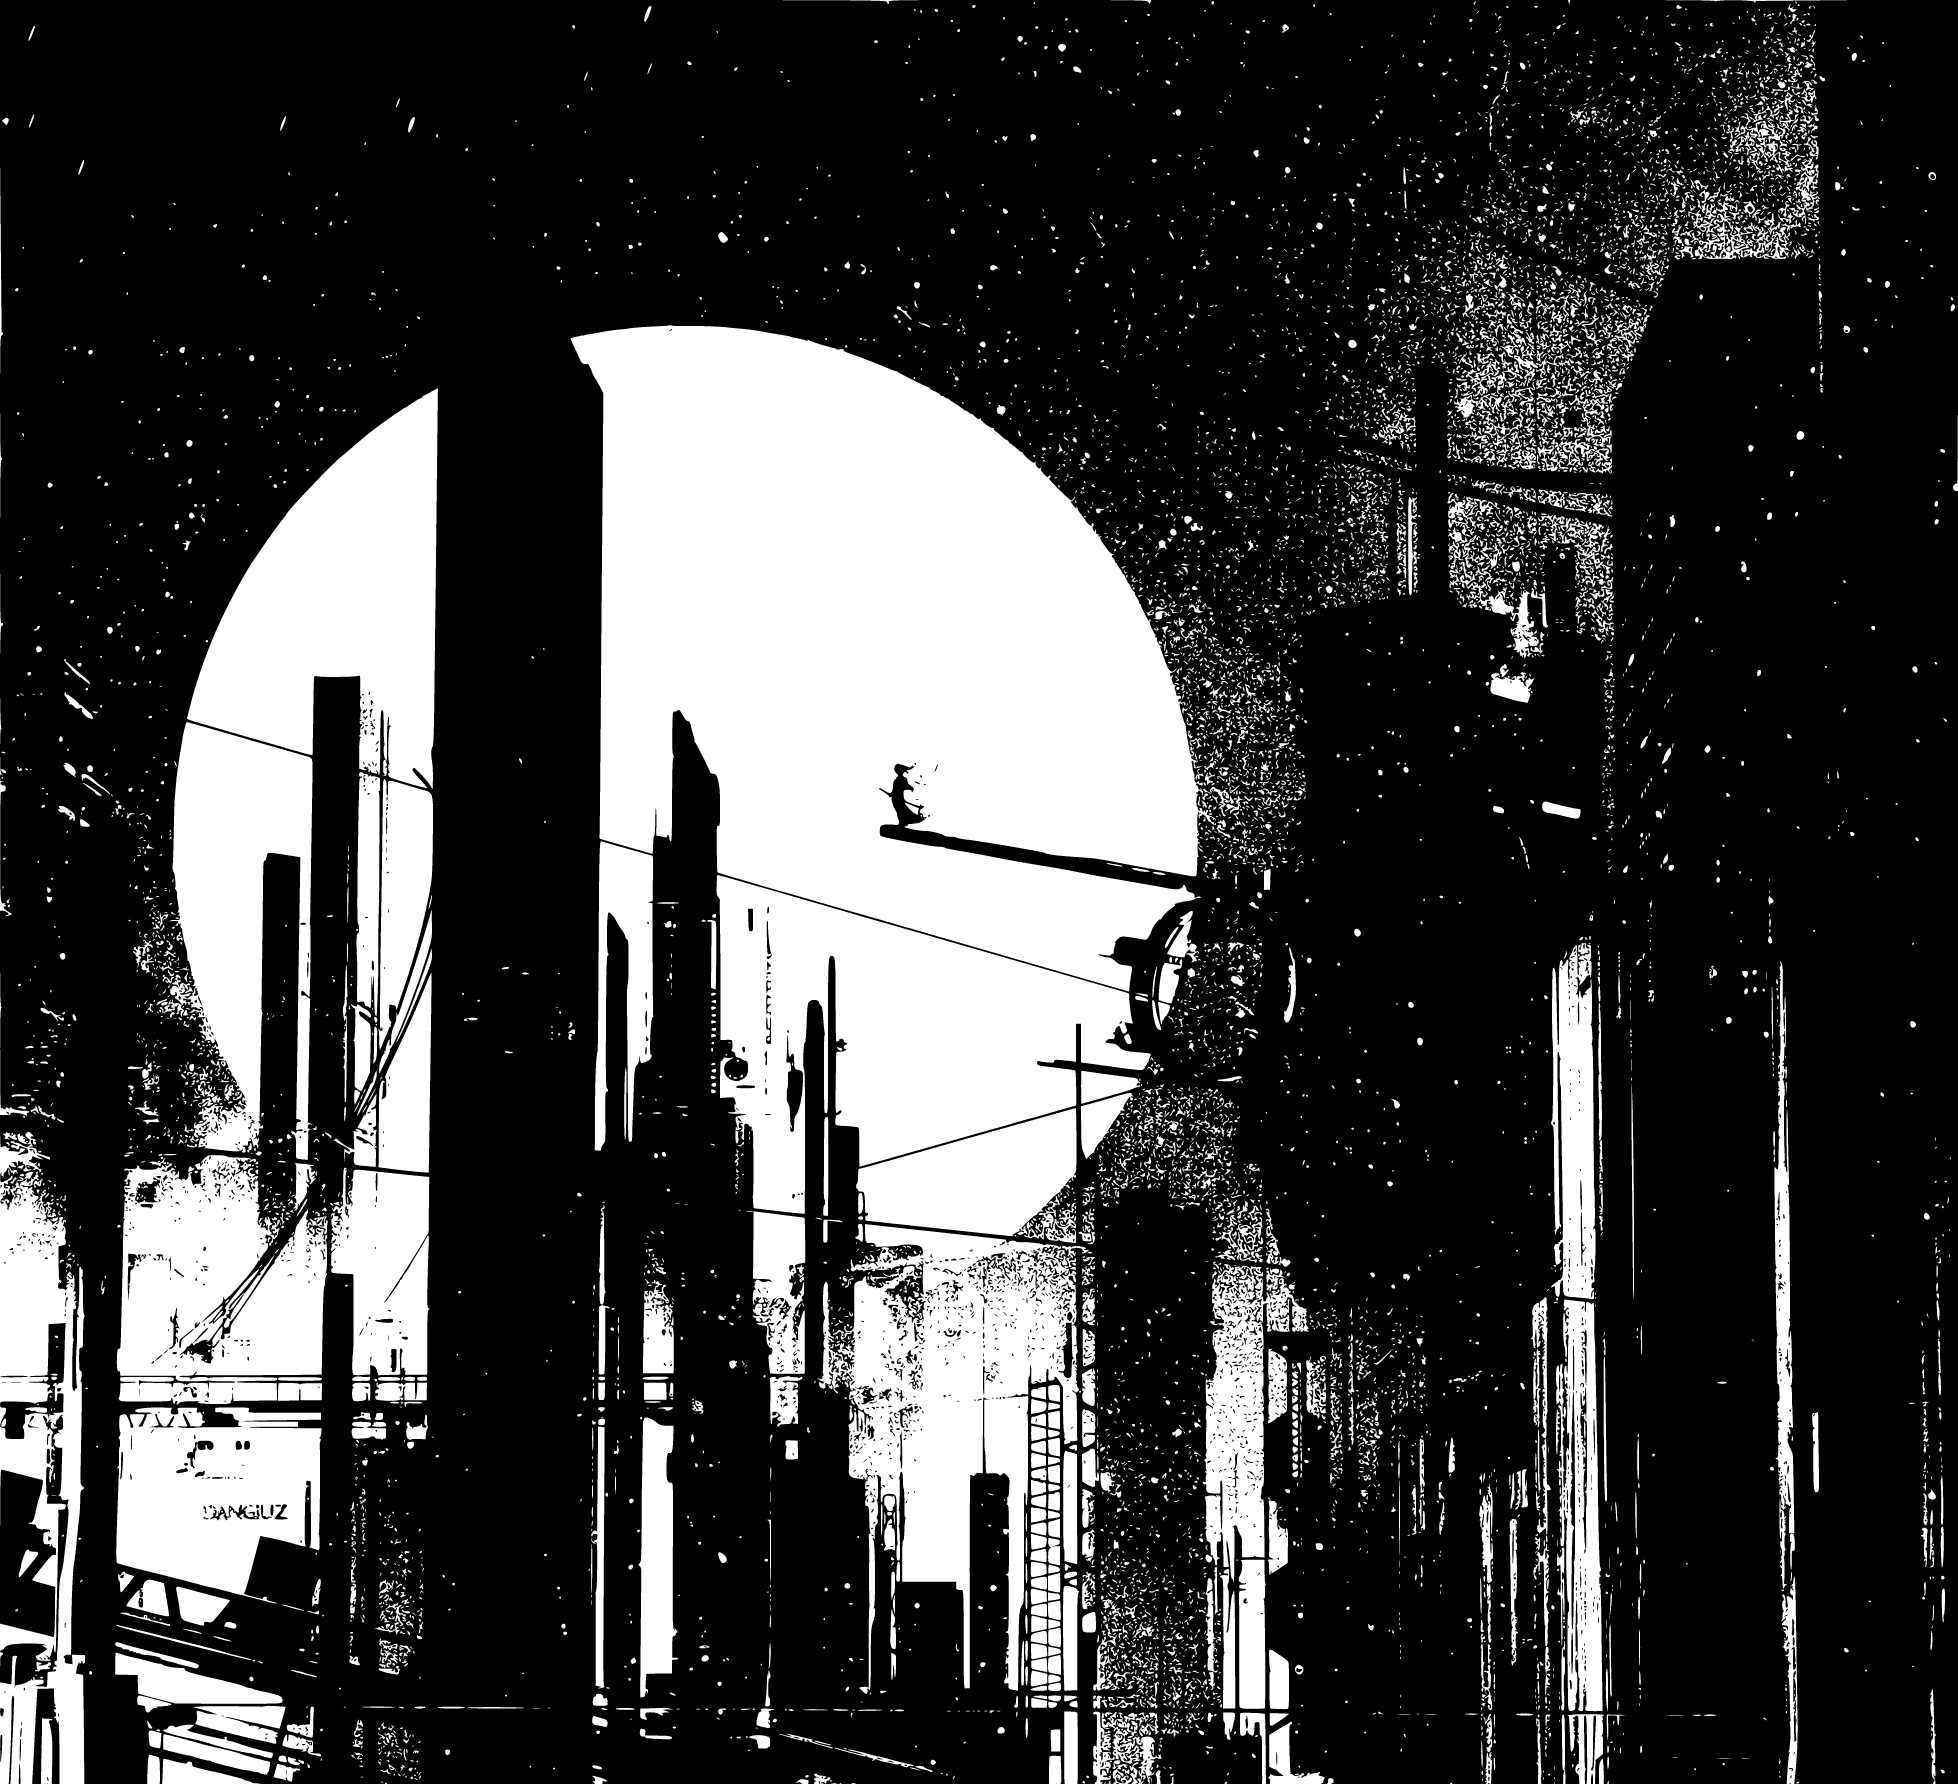 background image of night city